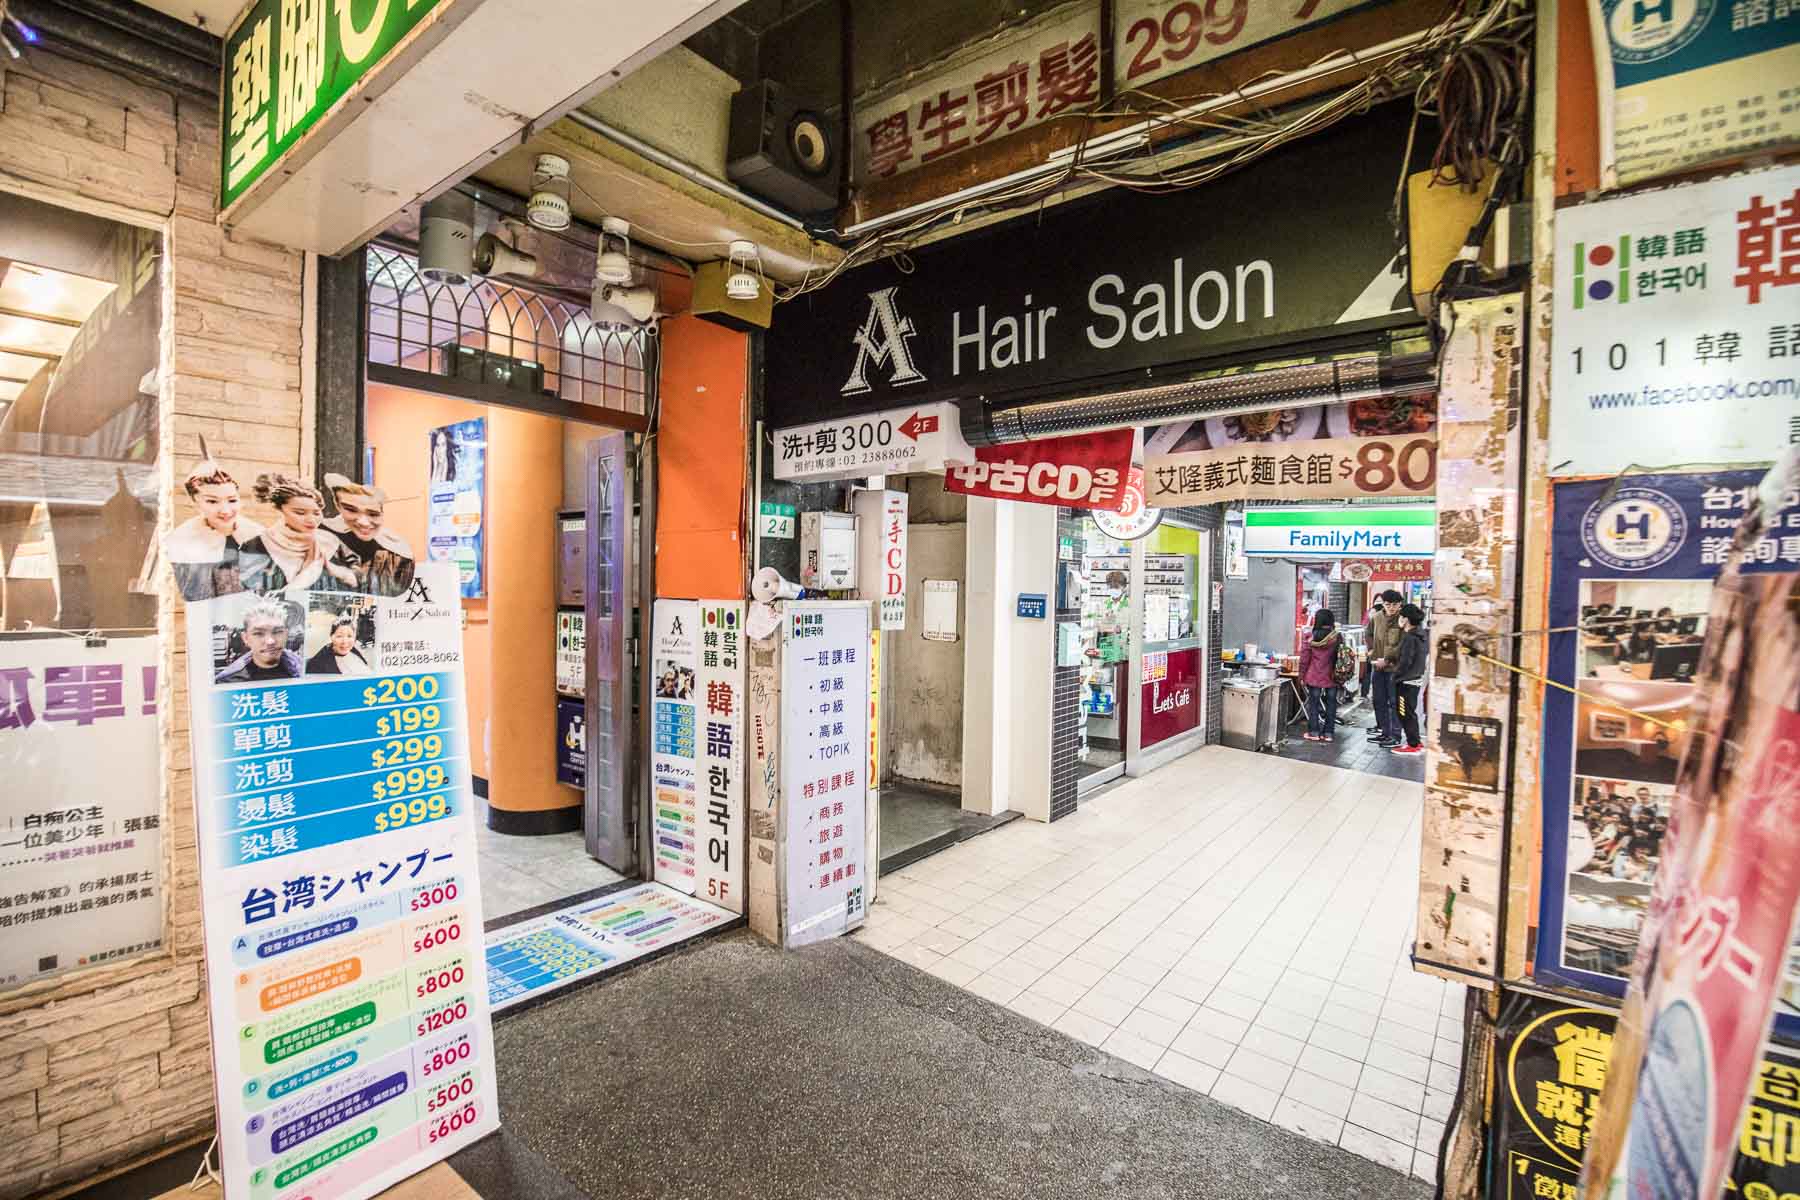 A Hair Salon,台北車站A Hair Salon,設計師Aileen,染髮,髮色,台北美髮,台北髮型設計,台北車站髮型設計